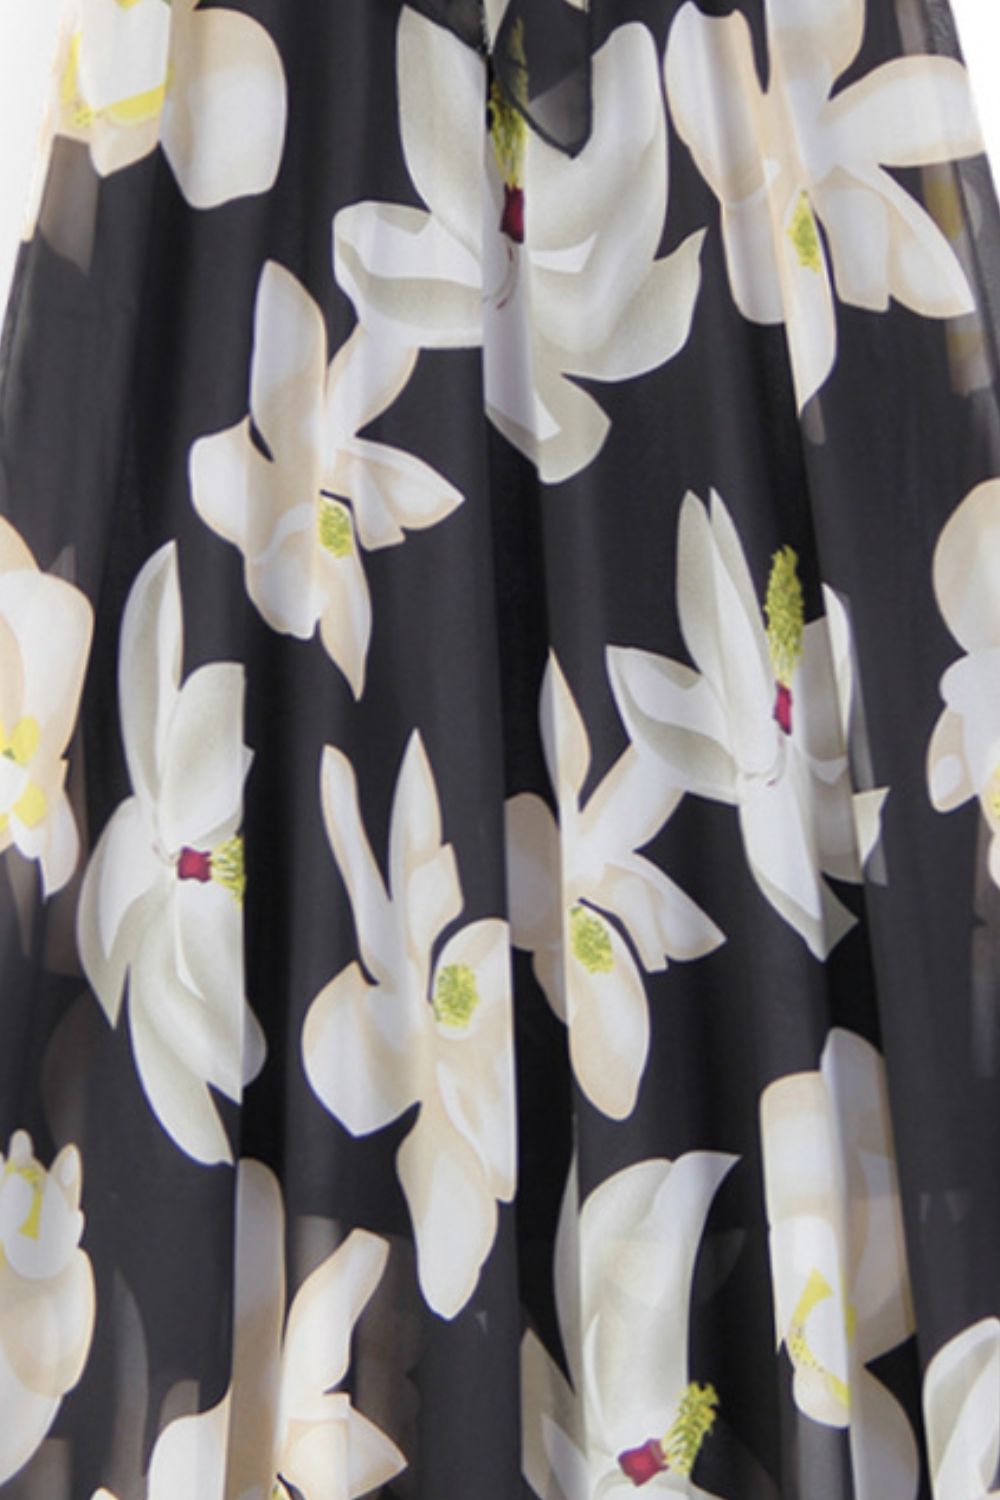 Floral Tie-Waist Skirt